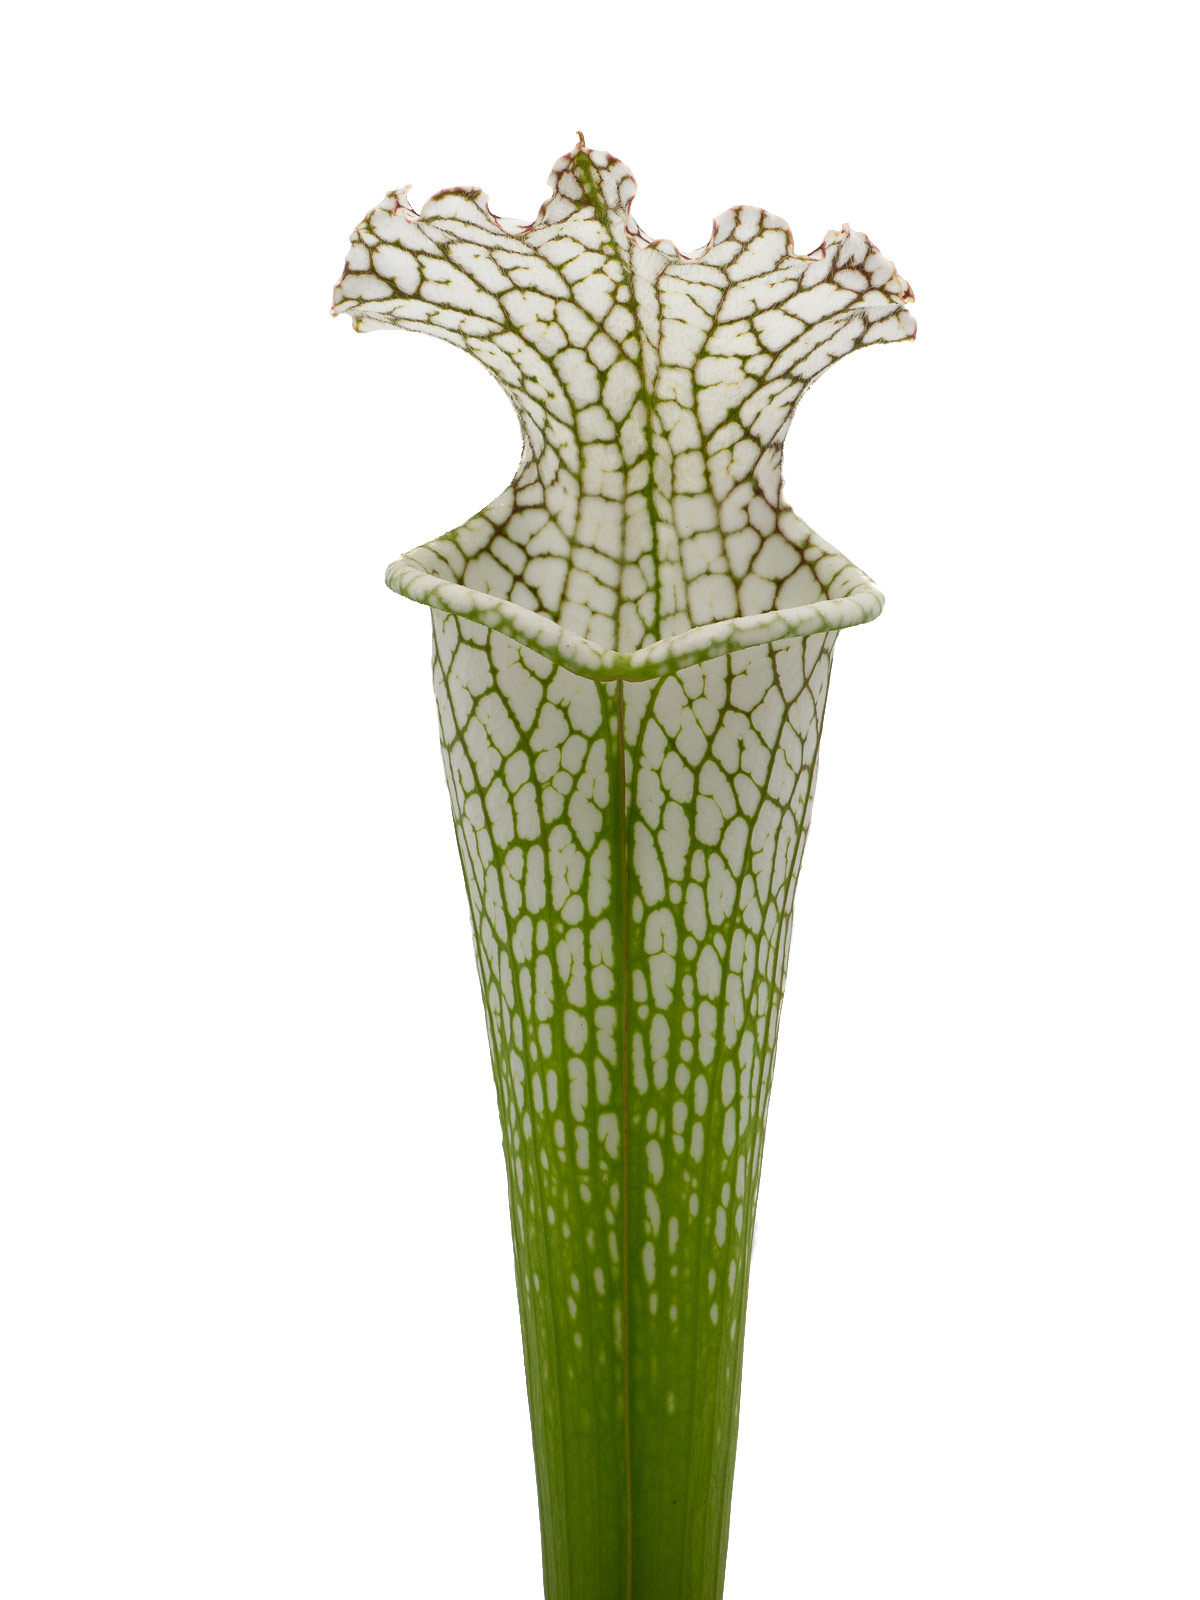 Sarracenia leucophylla - KP10-2007, Mirek Srba